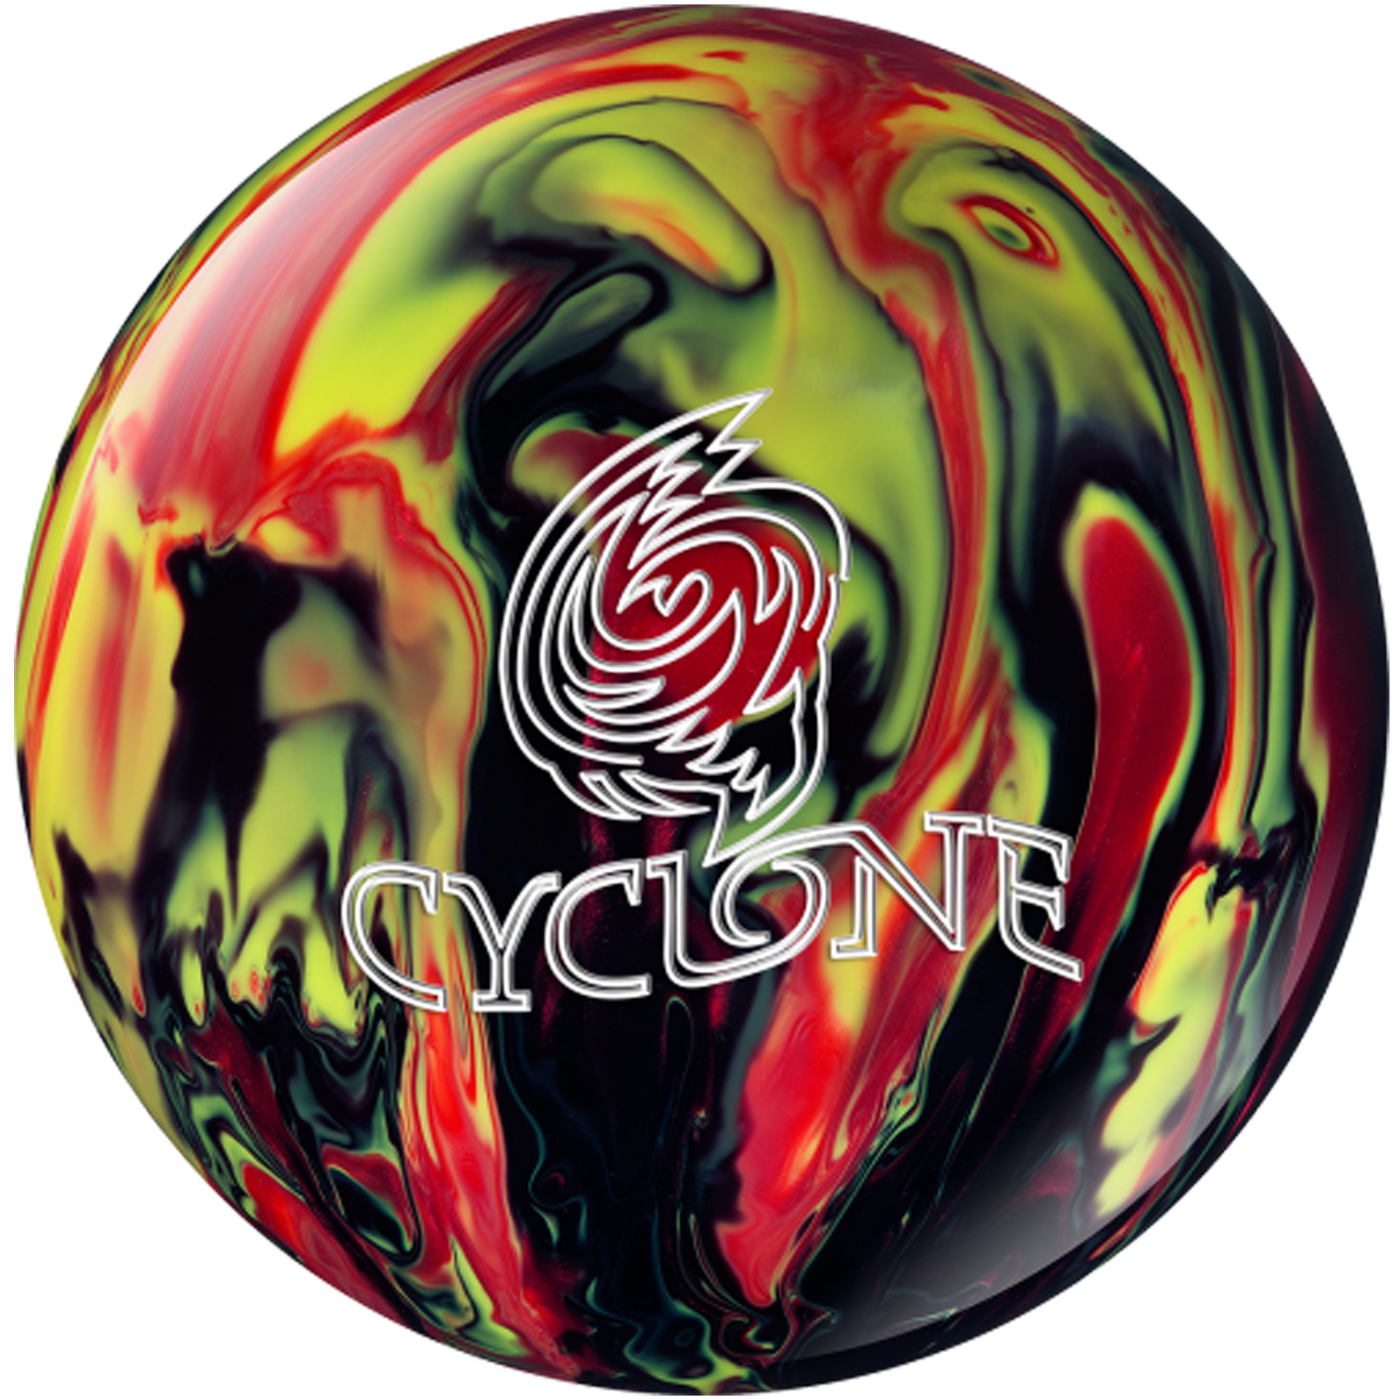 Cyclone Black/Red/Yellow Bowling Ball